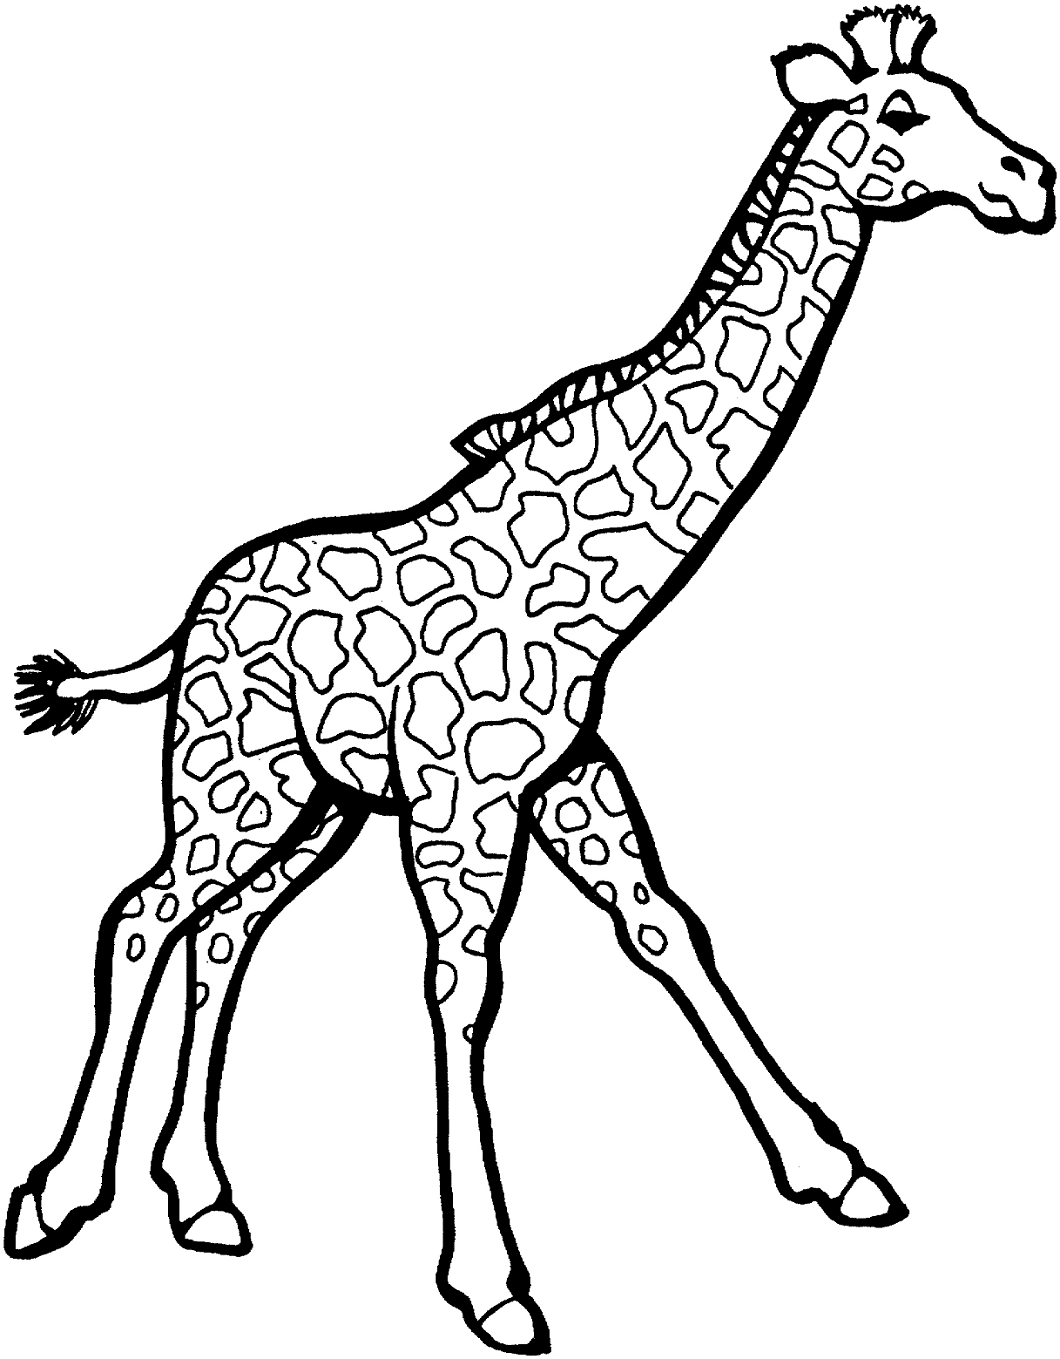 Жирафы для детей от Giraffes